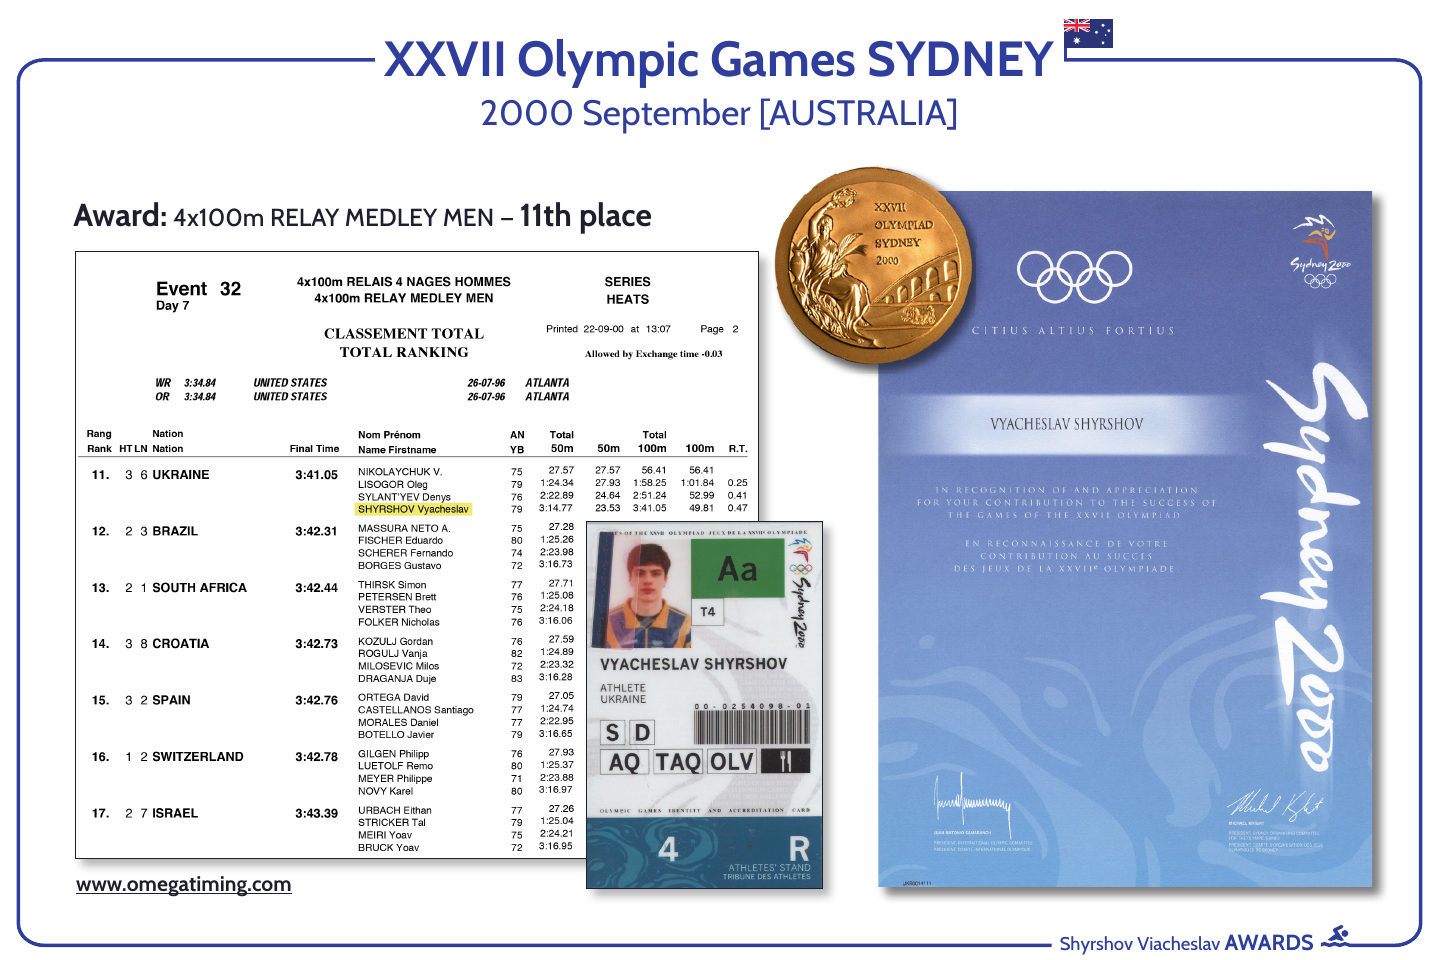 XXVII Olympic Games SYDNEY 2000